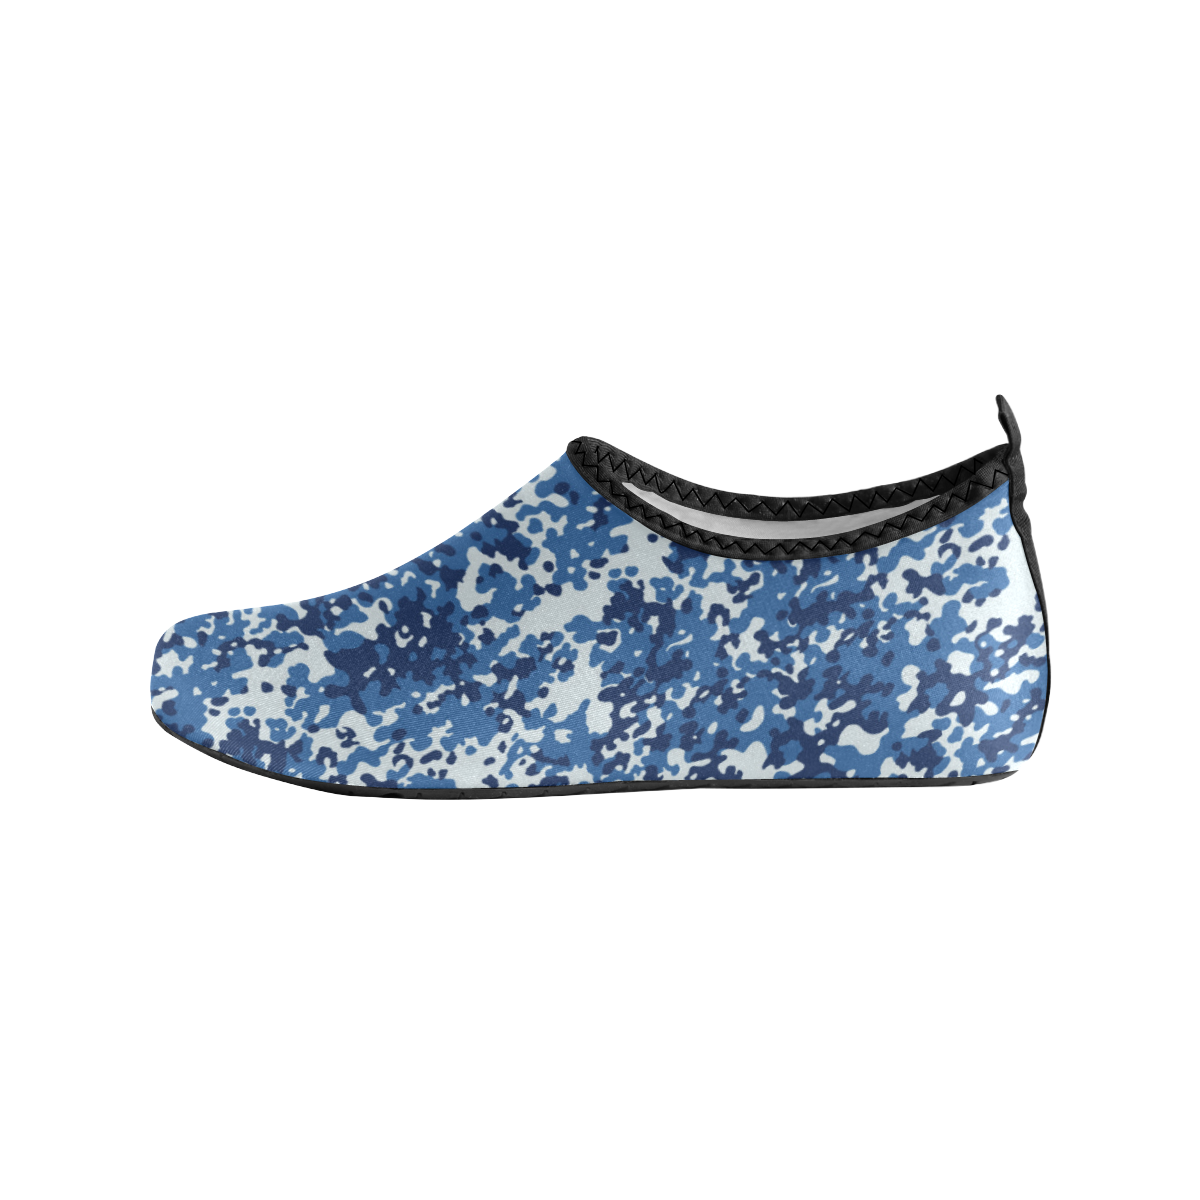 Digital Blue Camouflage Men's Slip-On Water Shoes (Model 056)